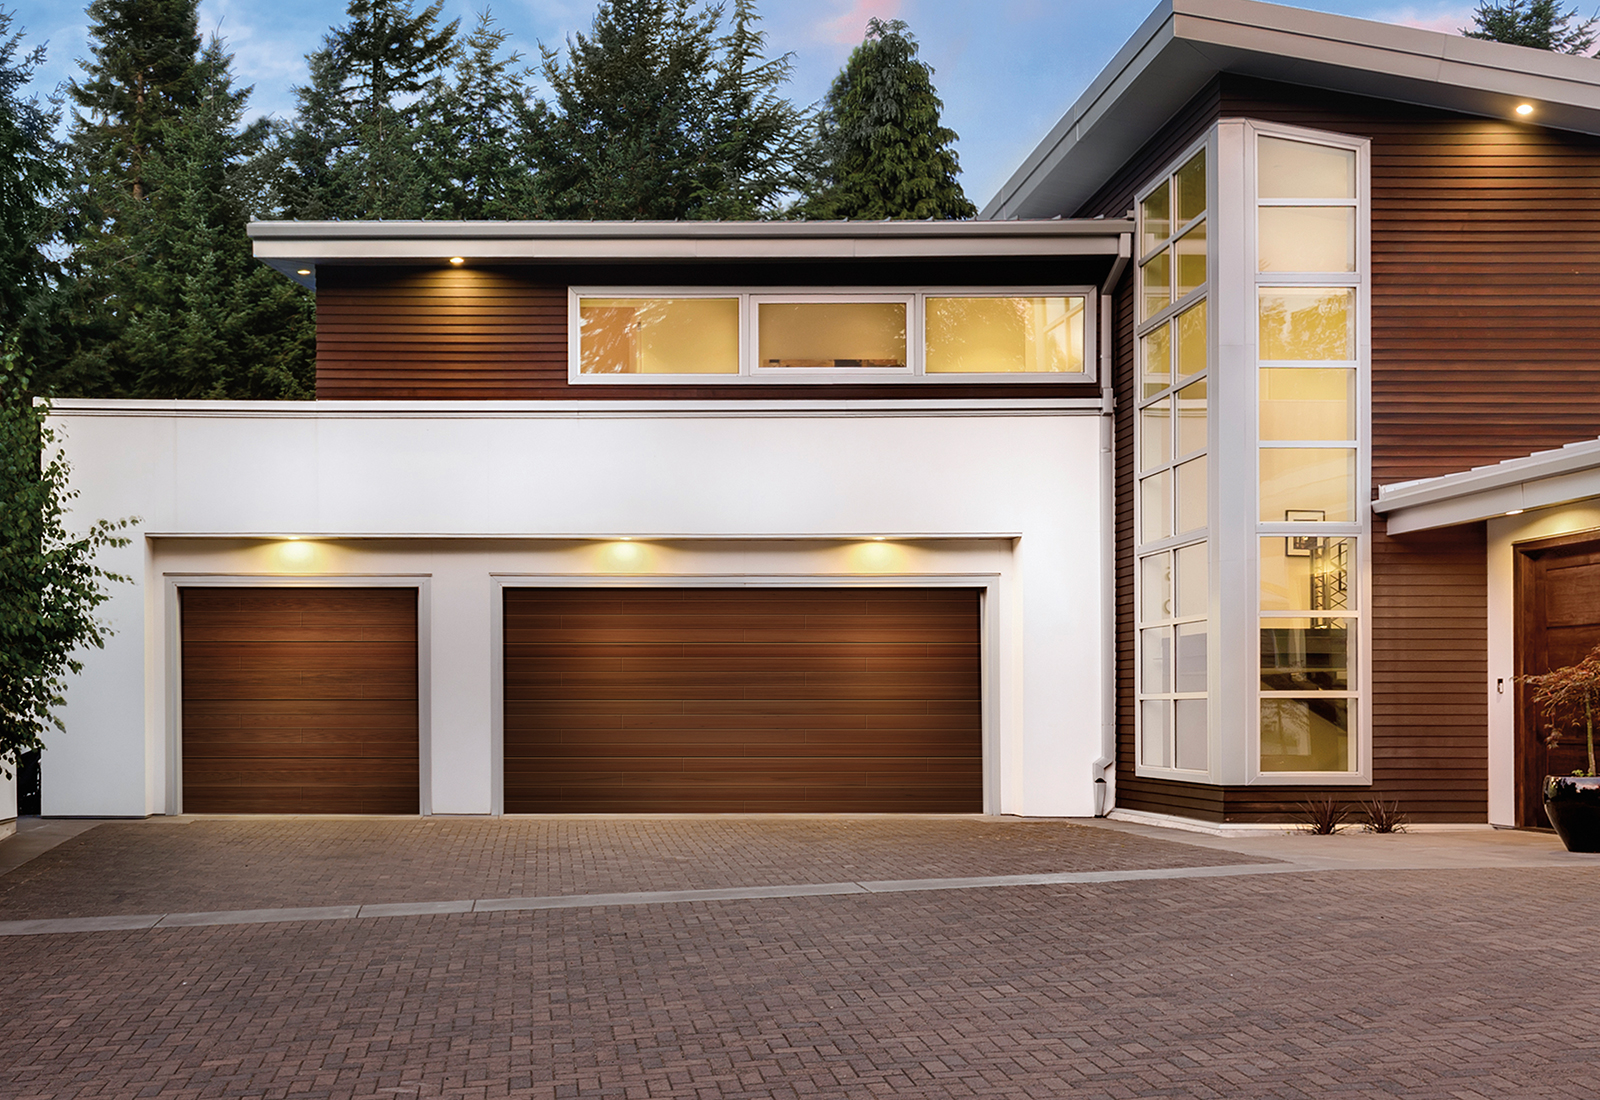 Residential garage door design by Clopay. Design is called Reserve Modern.